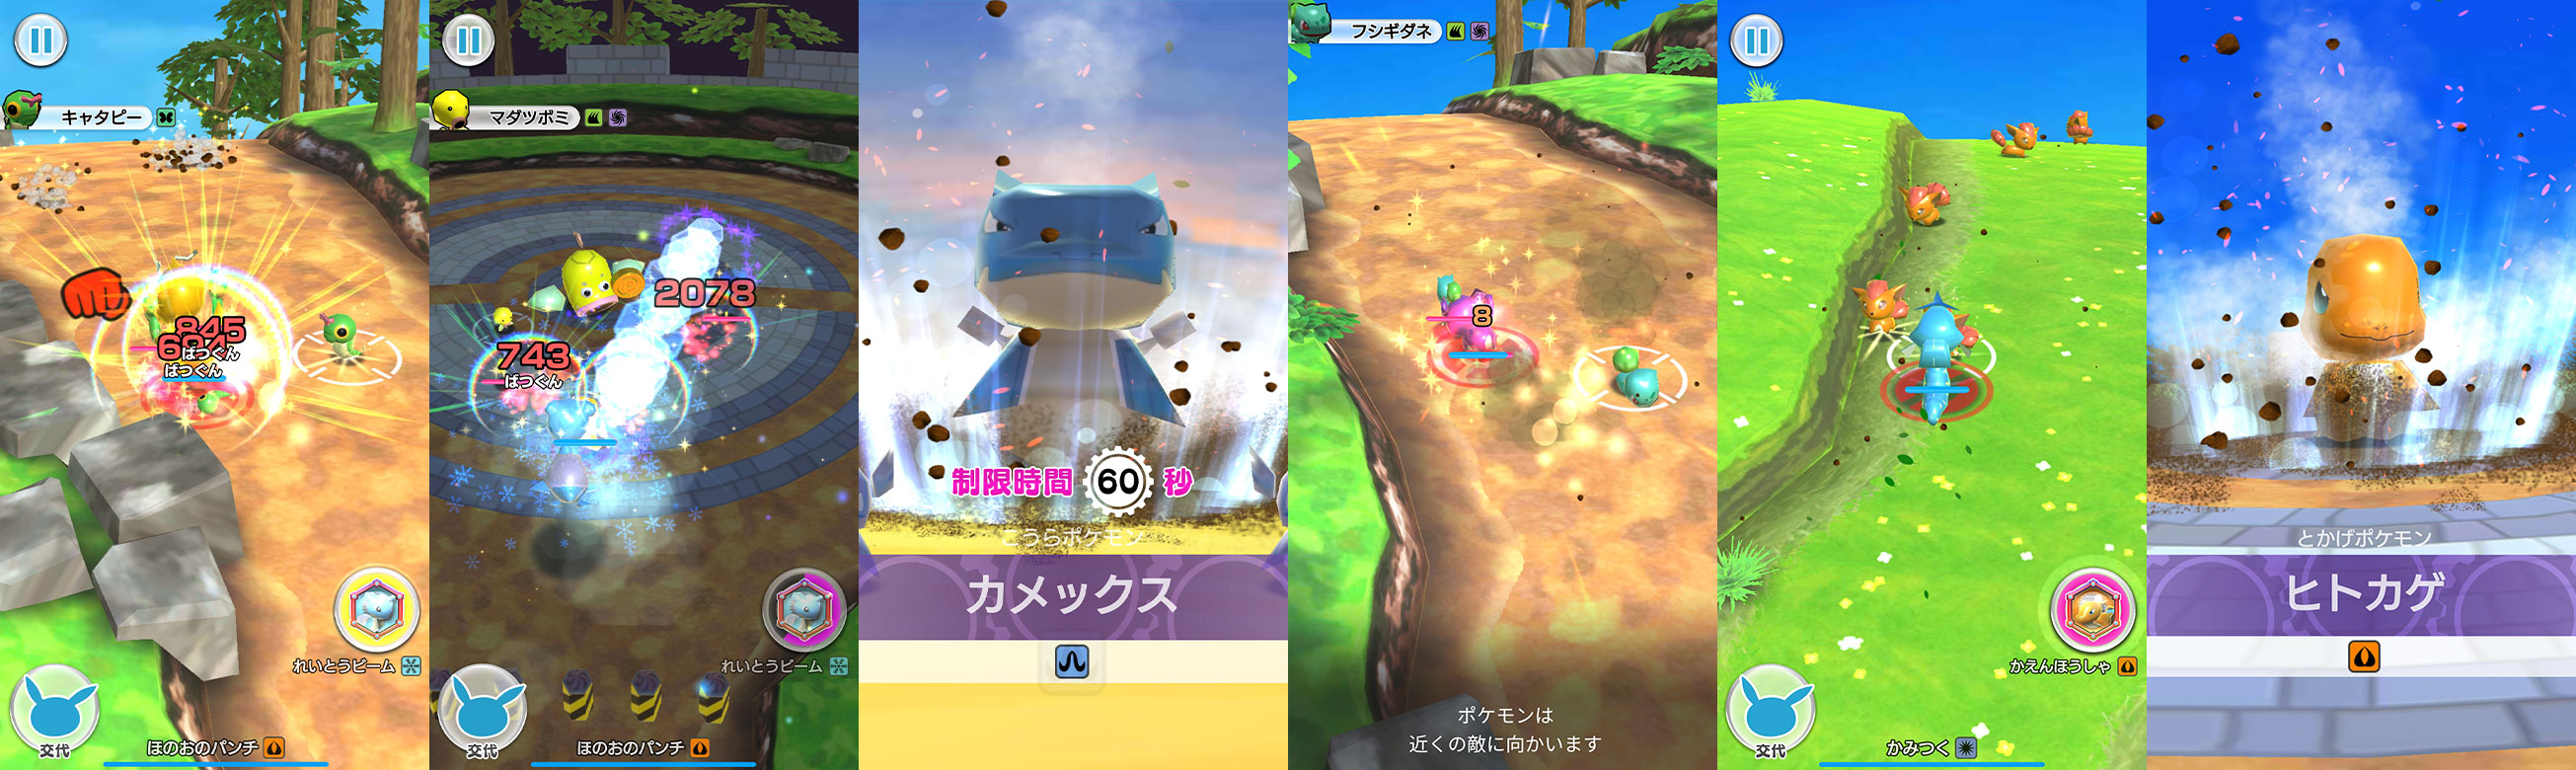 Pokémon Rumble SP annunciato per Android e iOS in Giappone